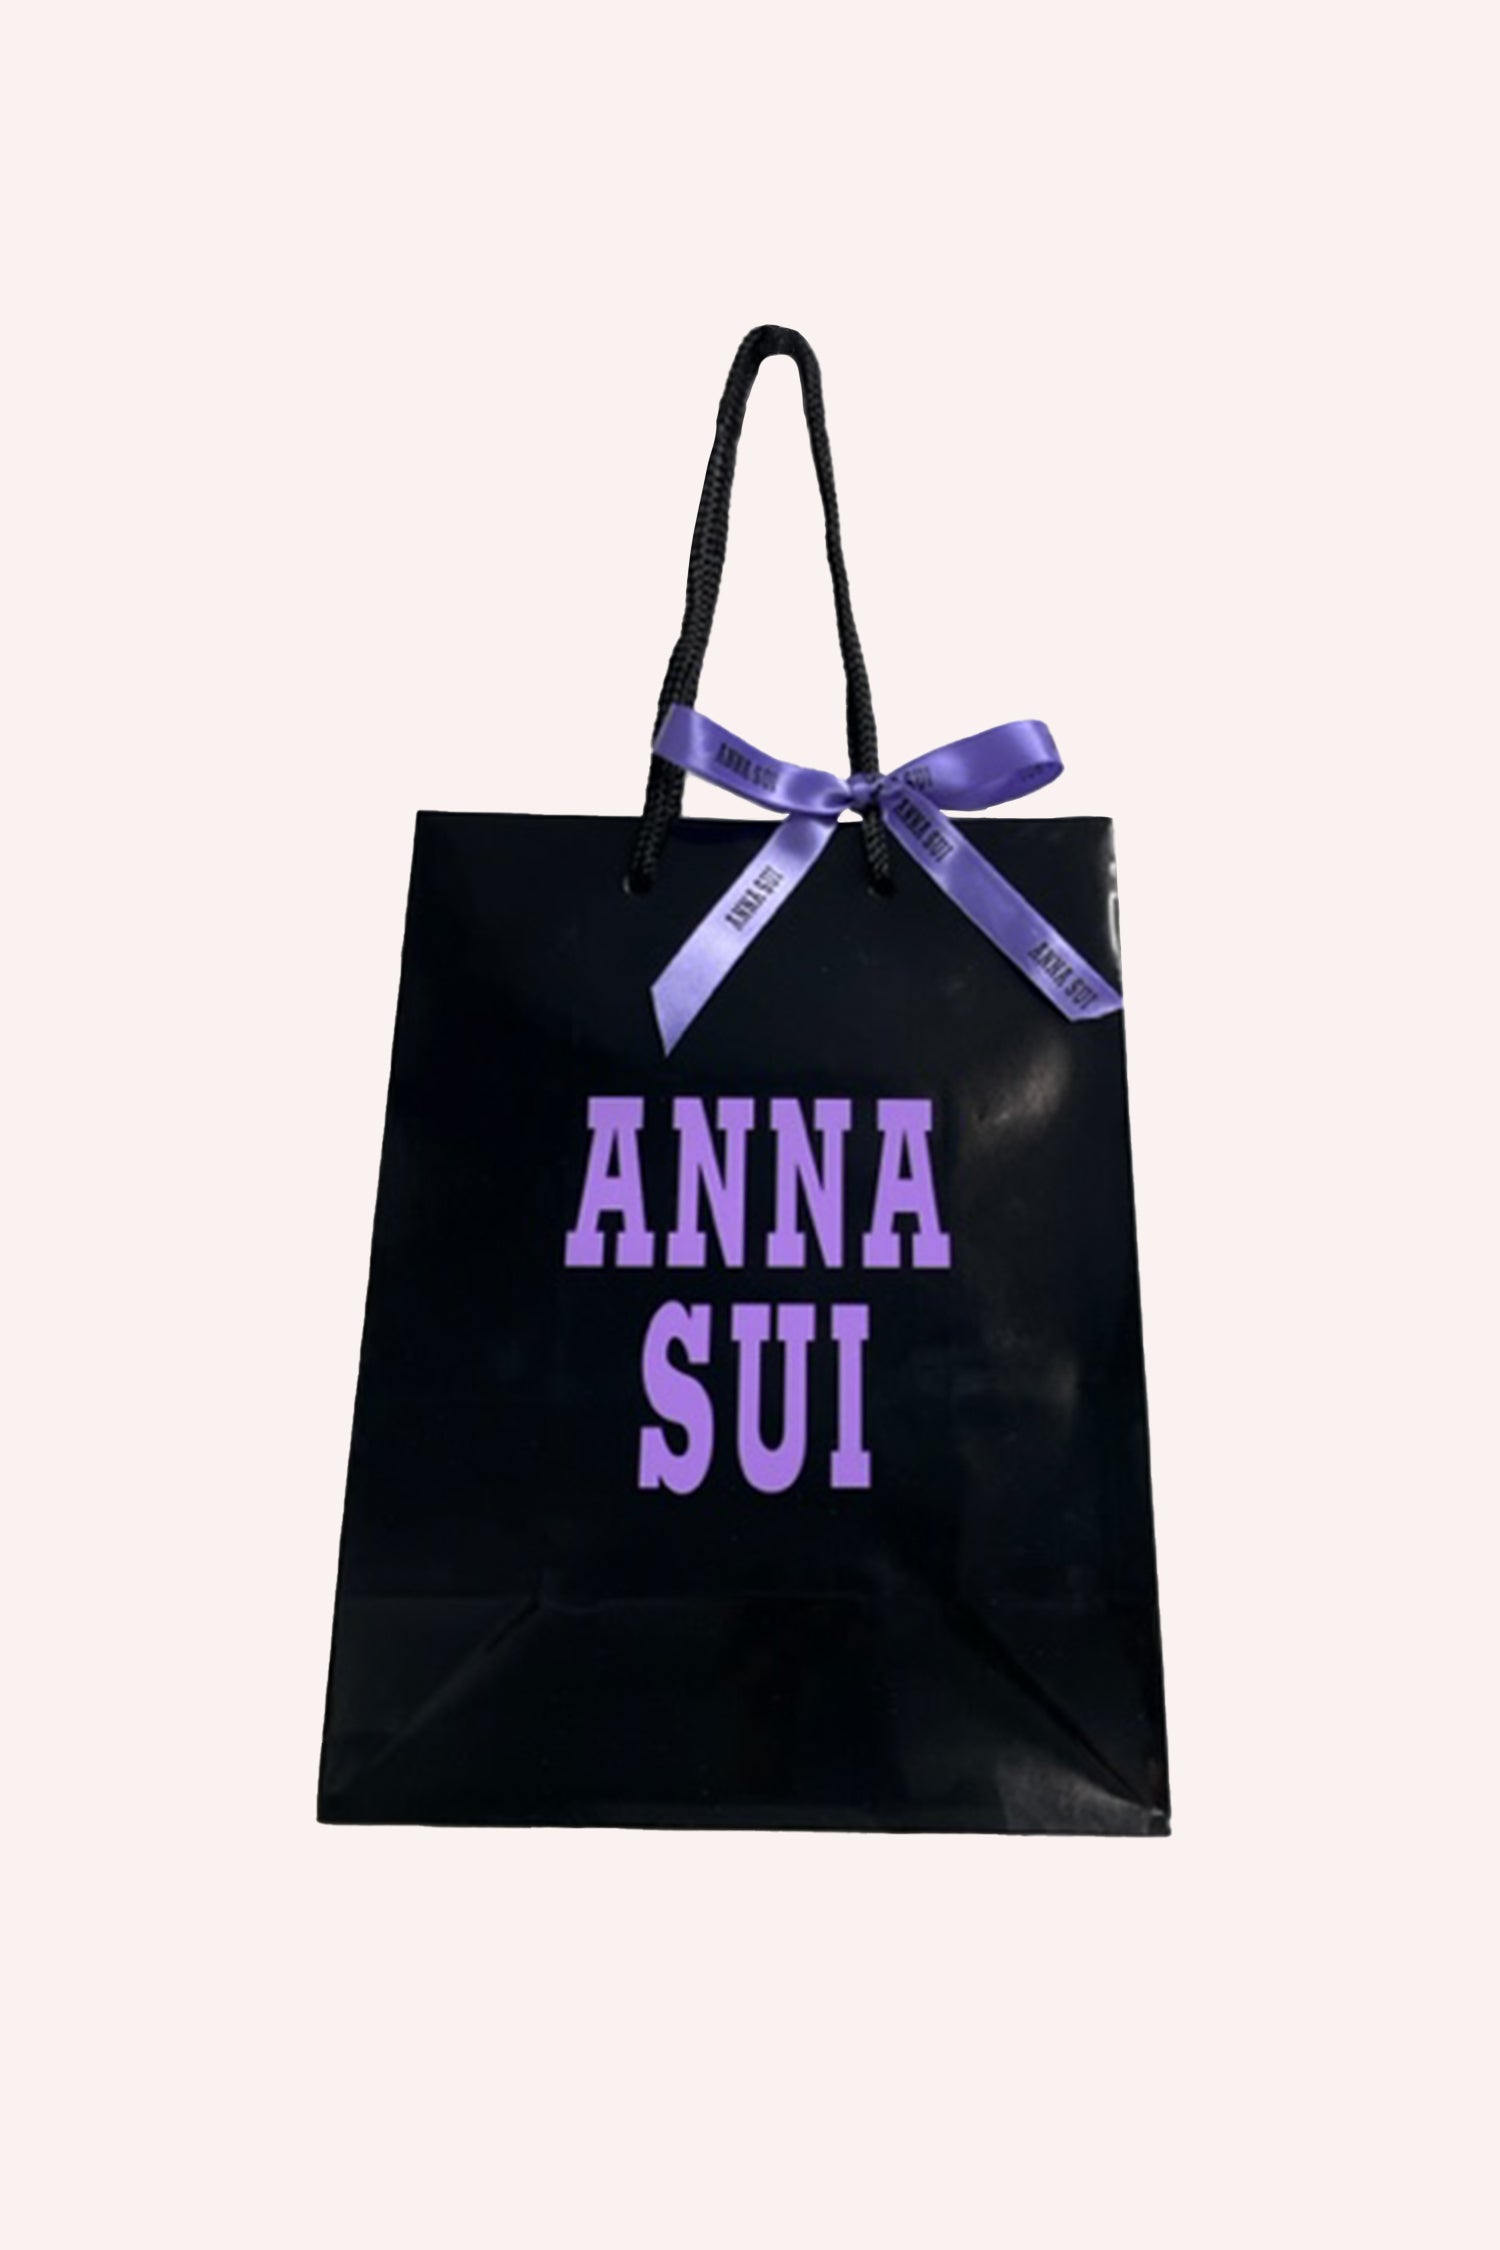 Tropical Havana Sock Bundle are in an Anna Sui gift bag